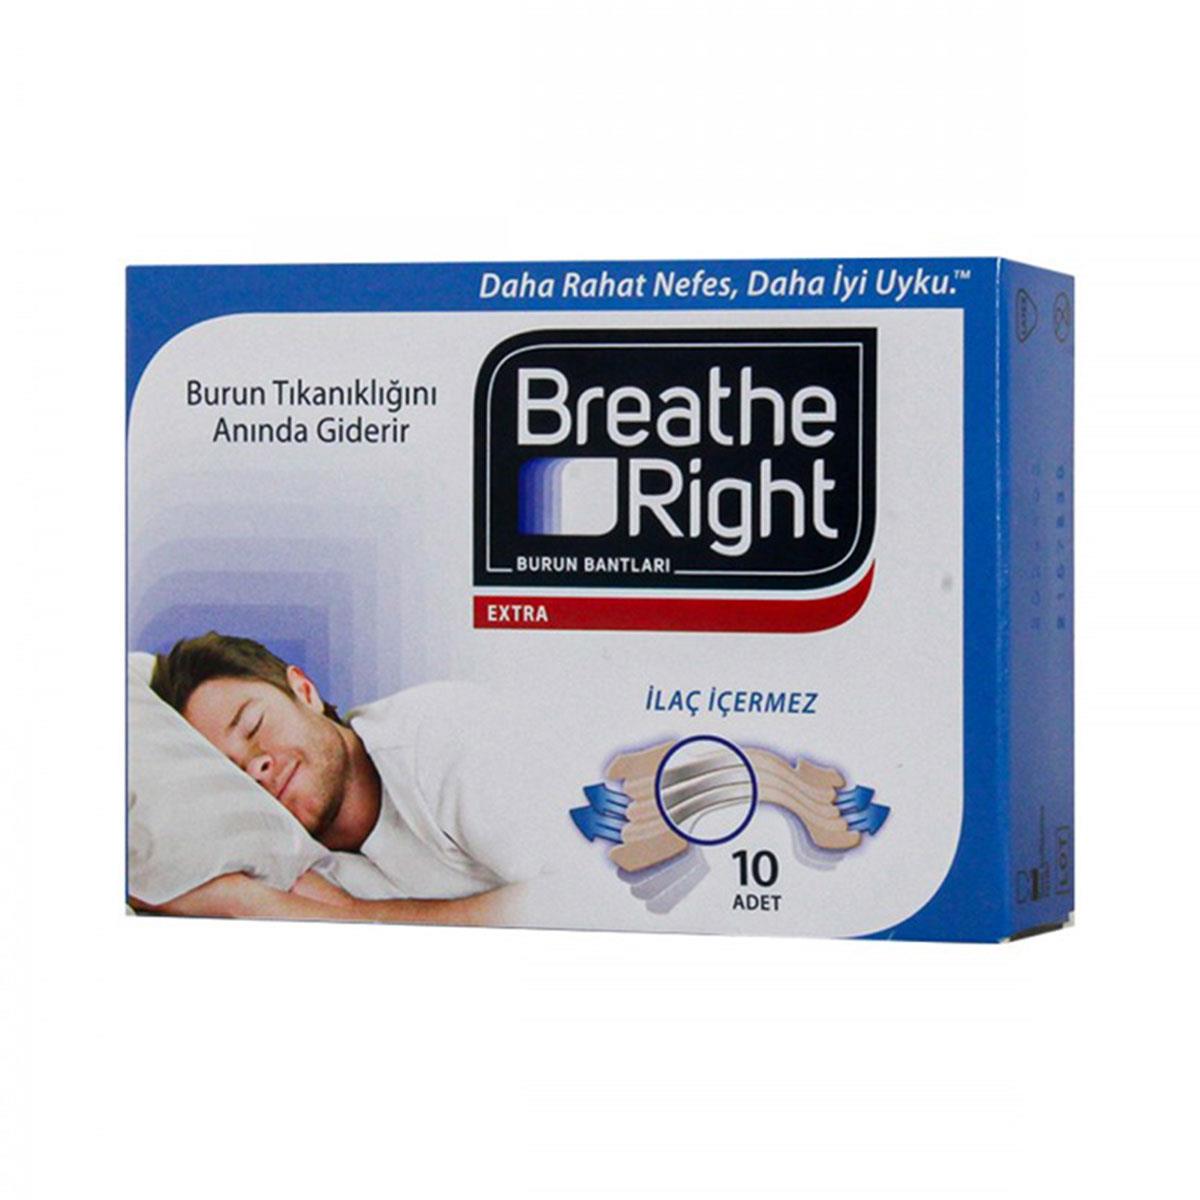 Breathe Right Extra Burun Bandı 10'lu - Daffne